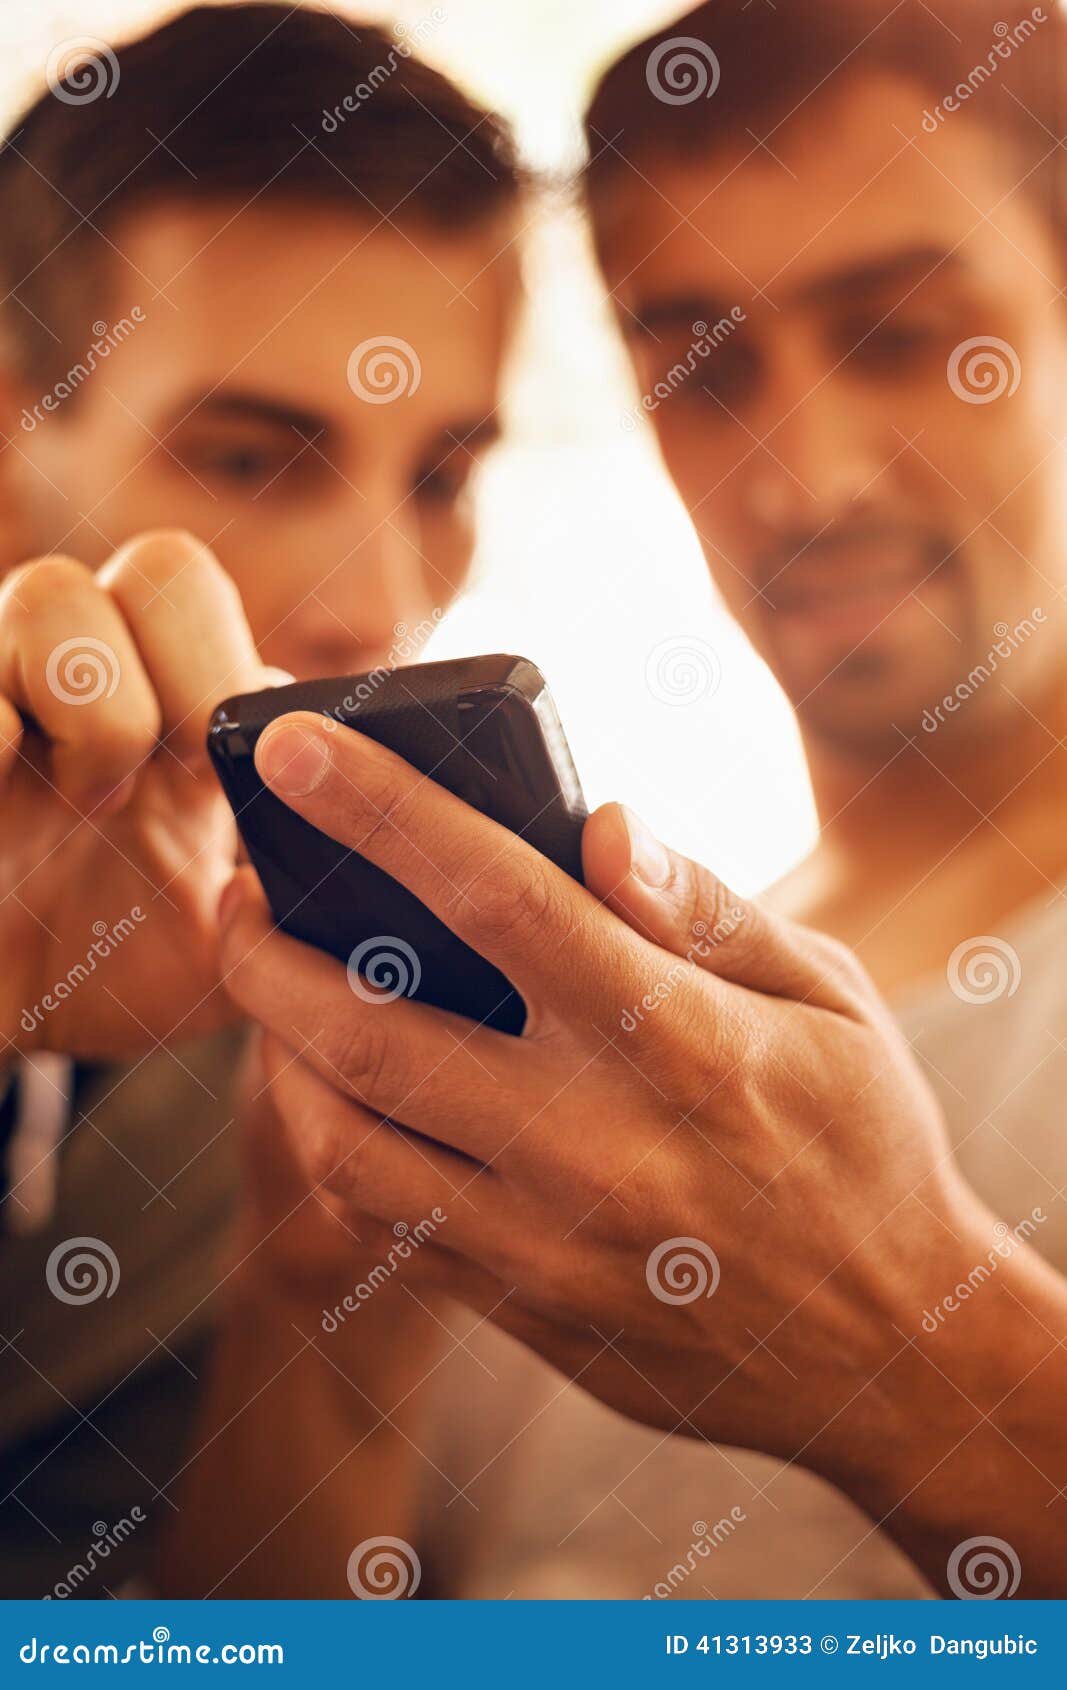 two men using smart phone